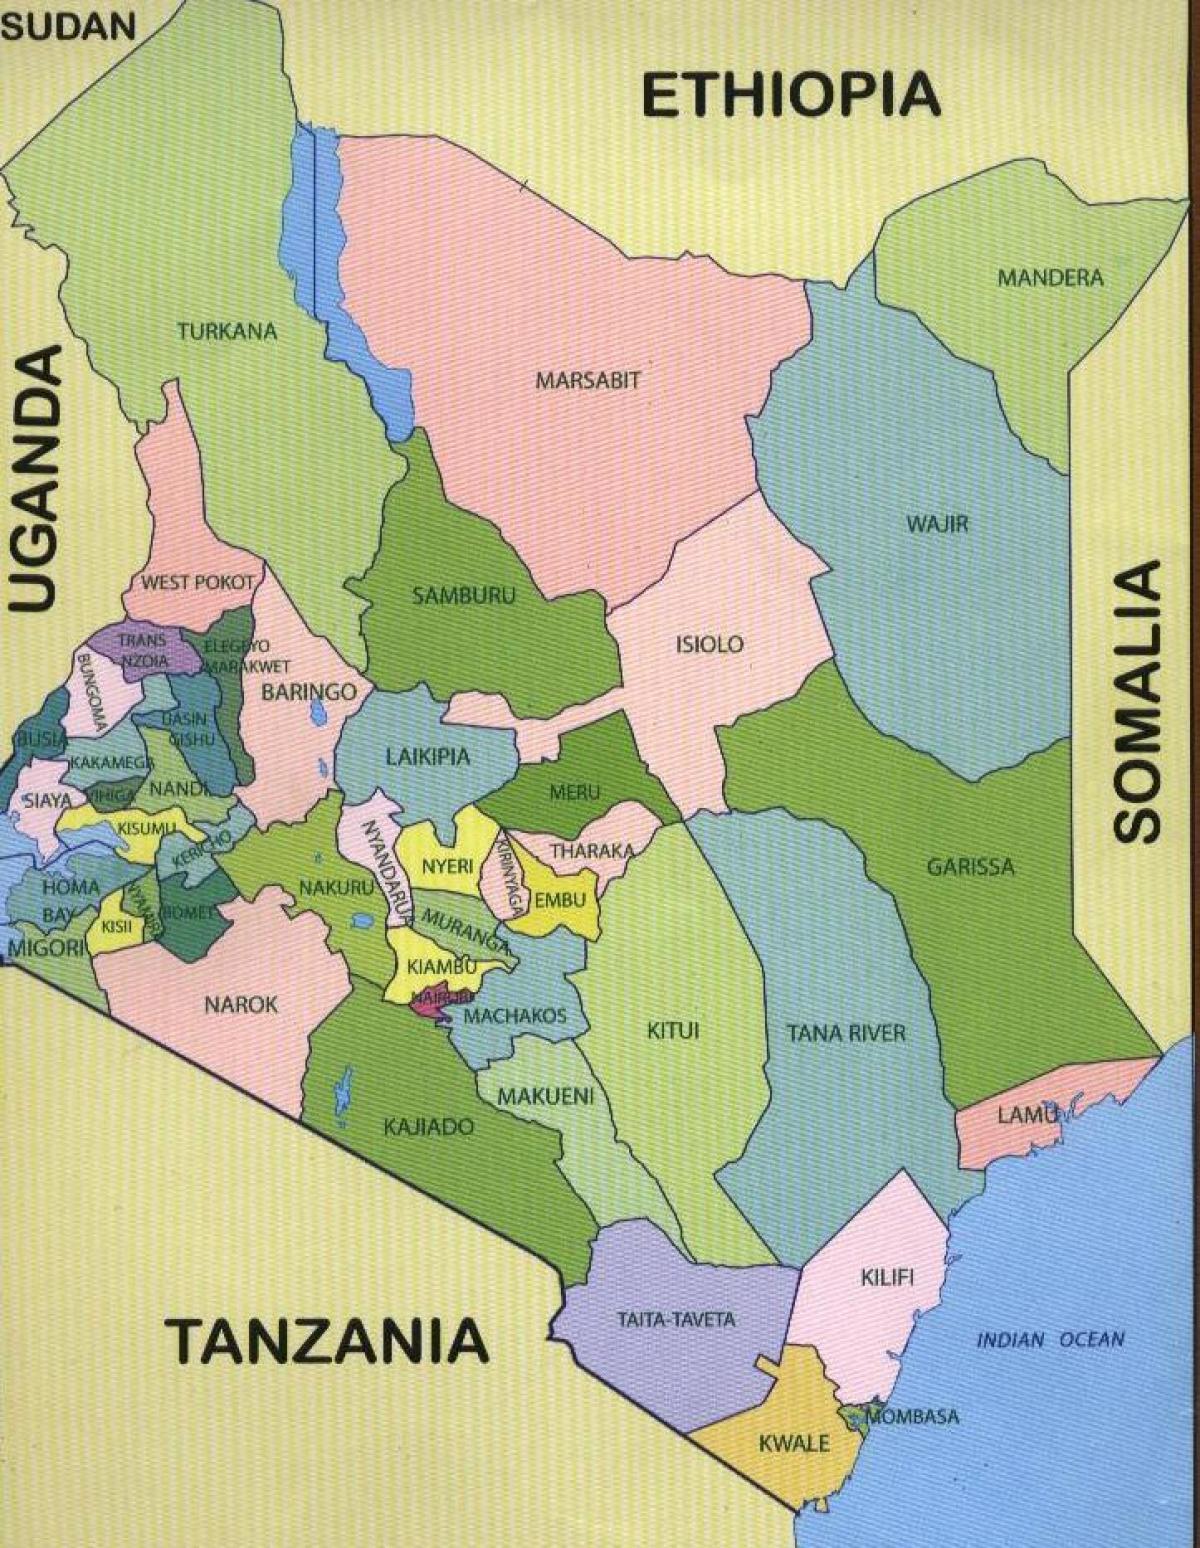 counties in Kenia anzeigen